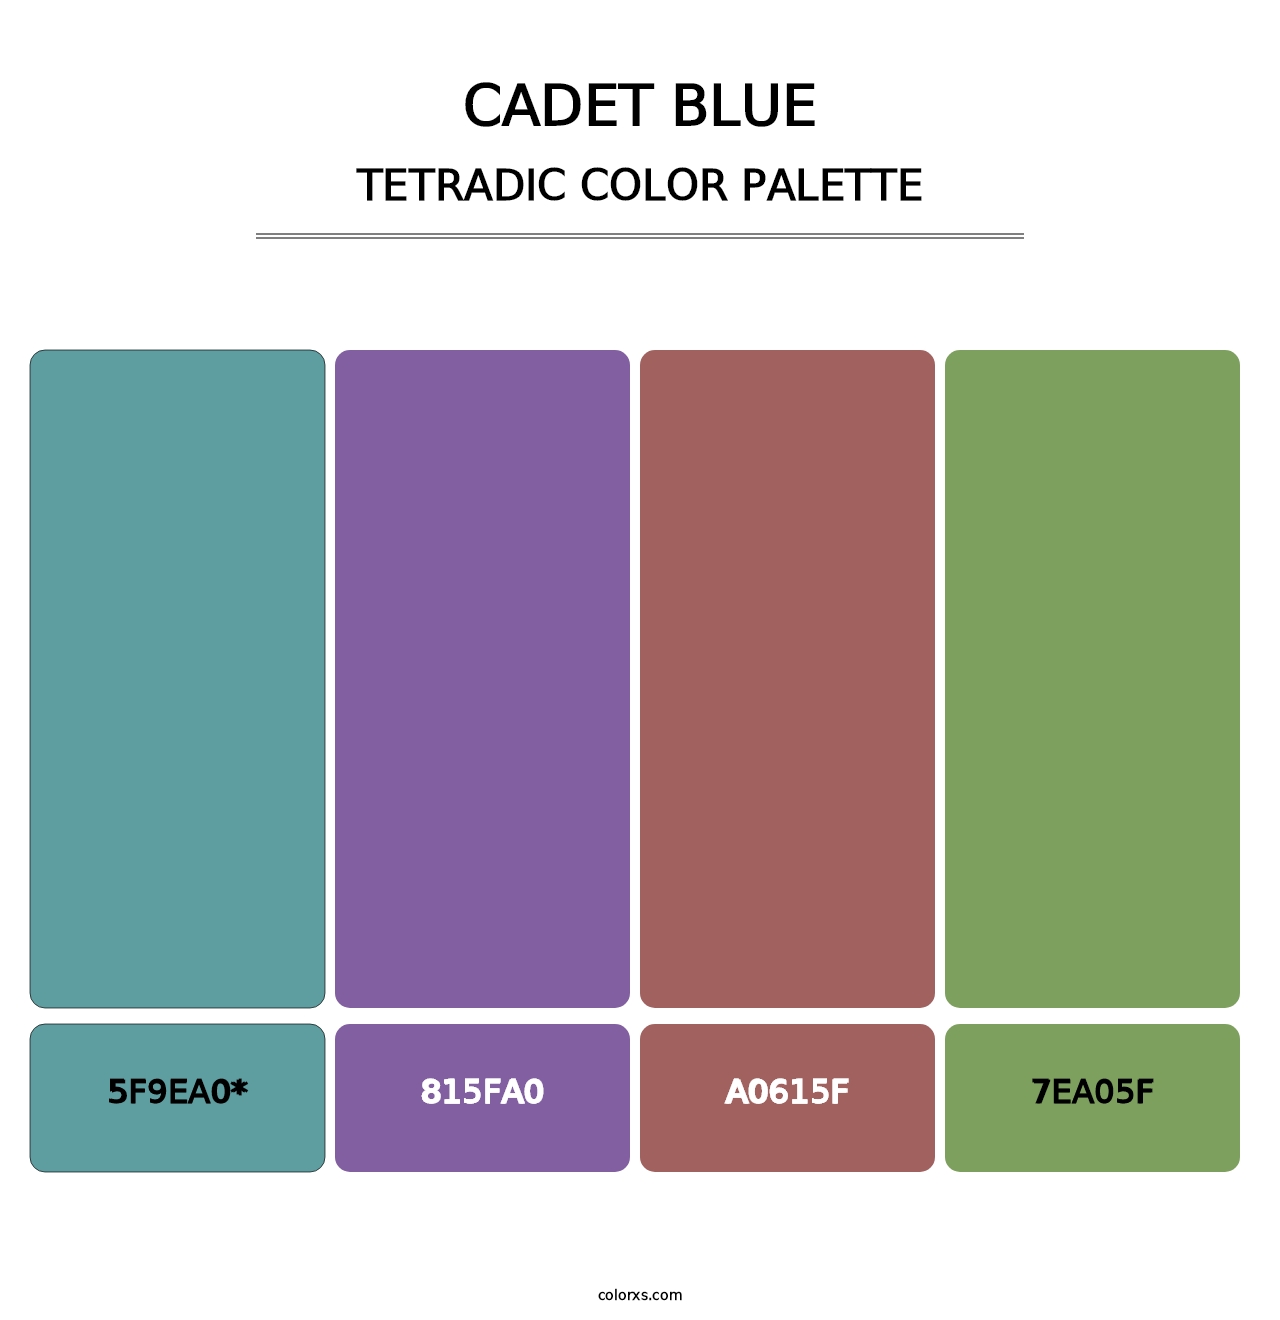 Cadet Blue - Tetradic Color Palette